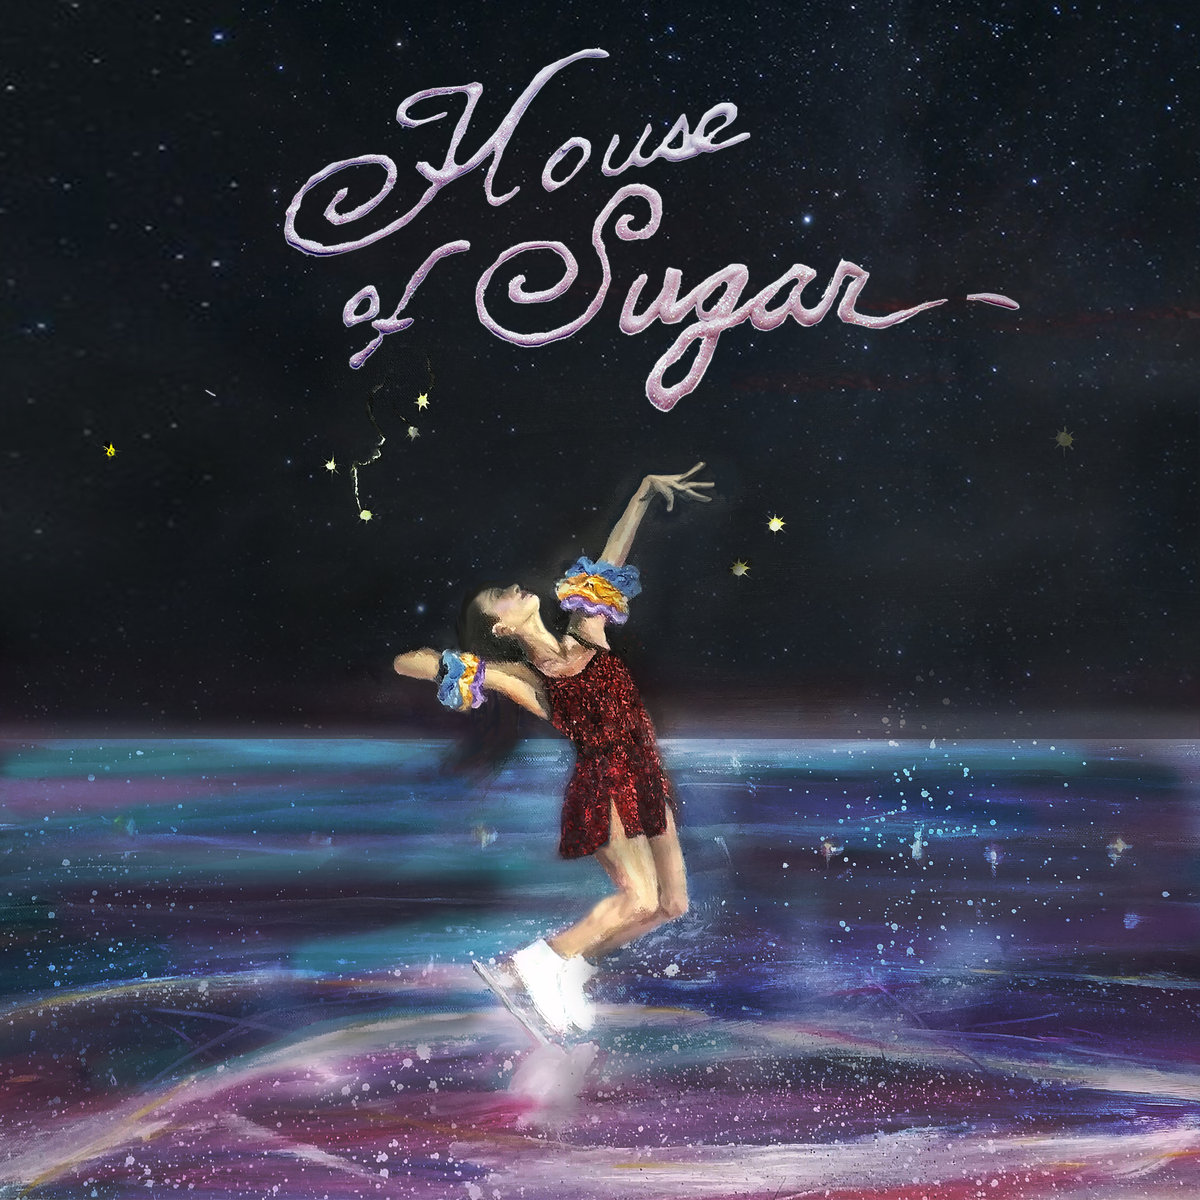 The album cover for Alex G's House of Sugar